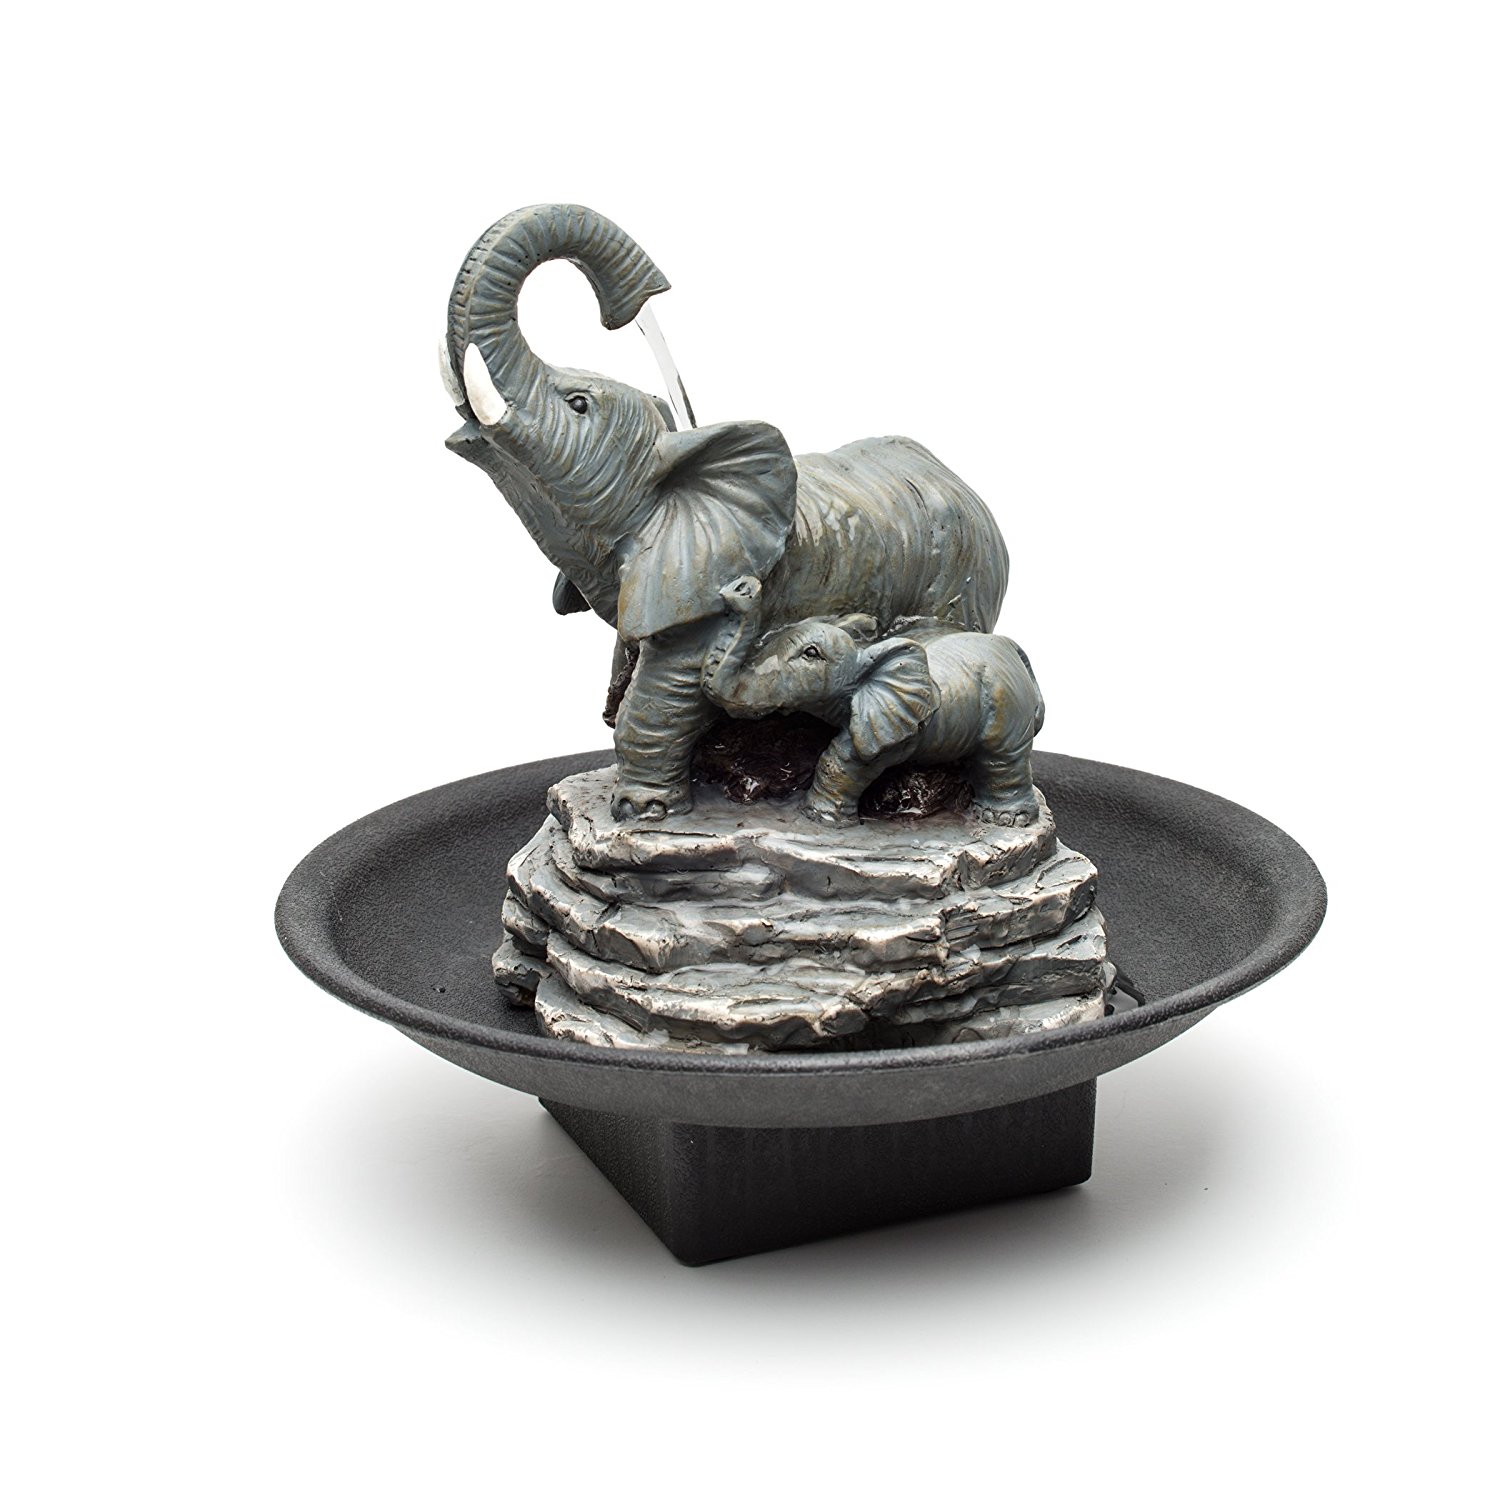 Amazon.com : Decor Desk Elephant Watering Hole Fountain - Water ...